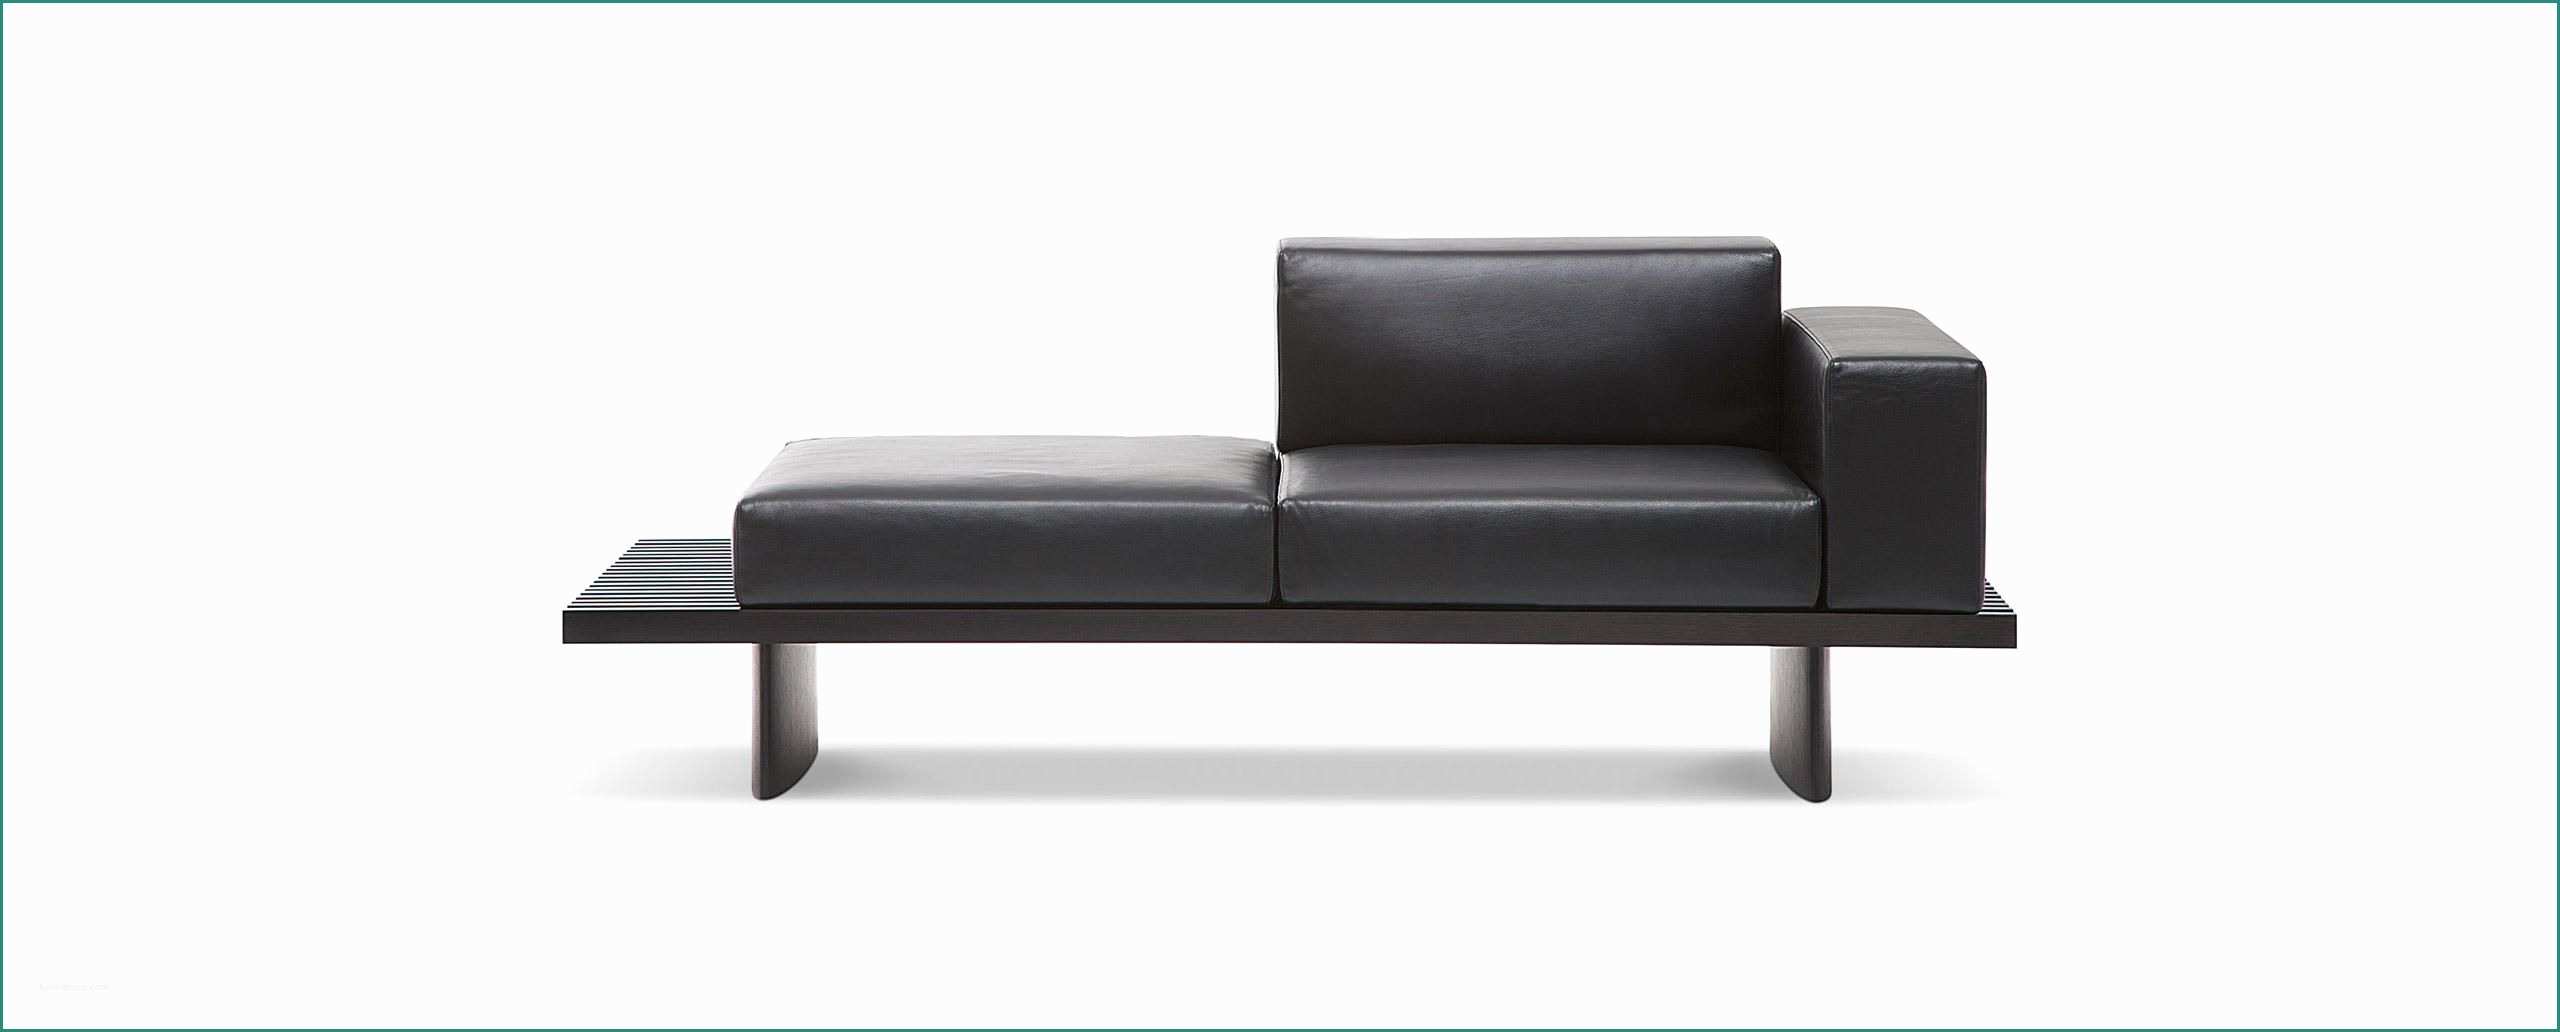 Poltrona Le Corbusier E 514 Refolo sofa by Cassina Via Designresource